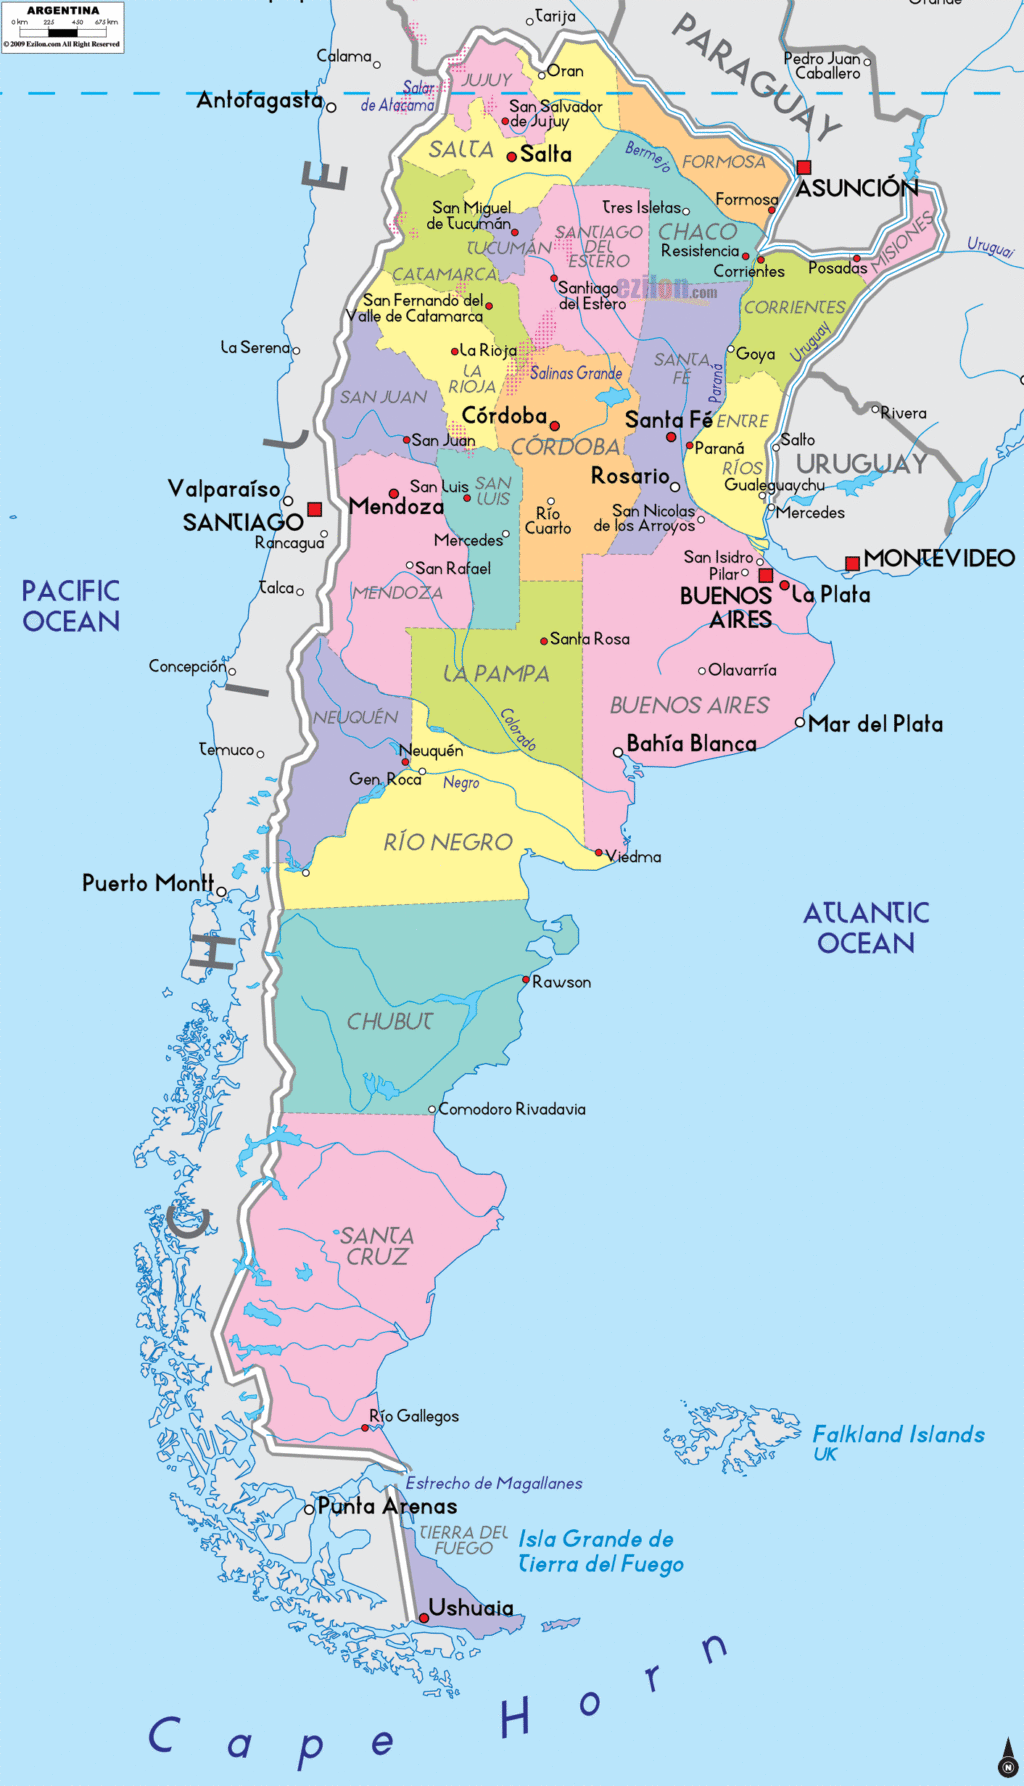 Argentina political map.